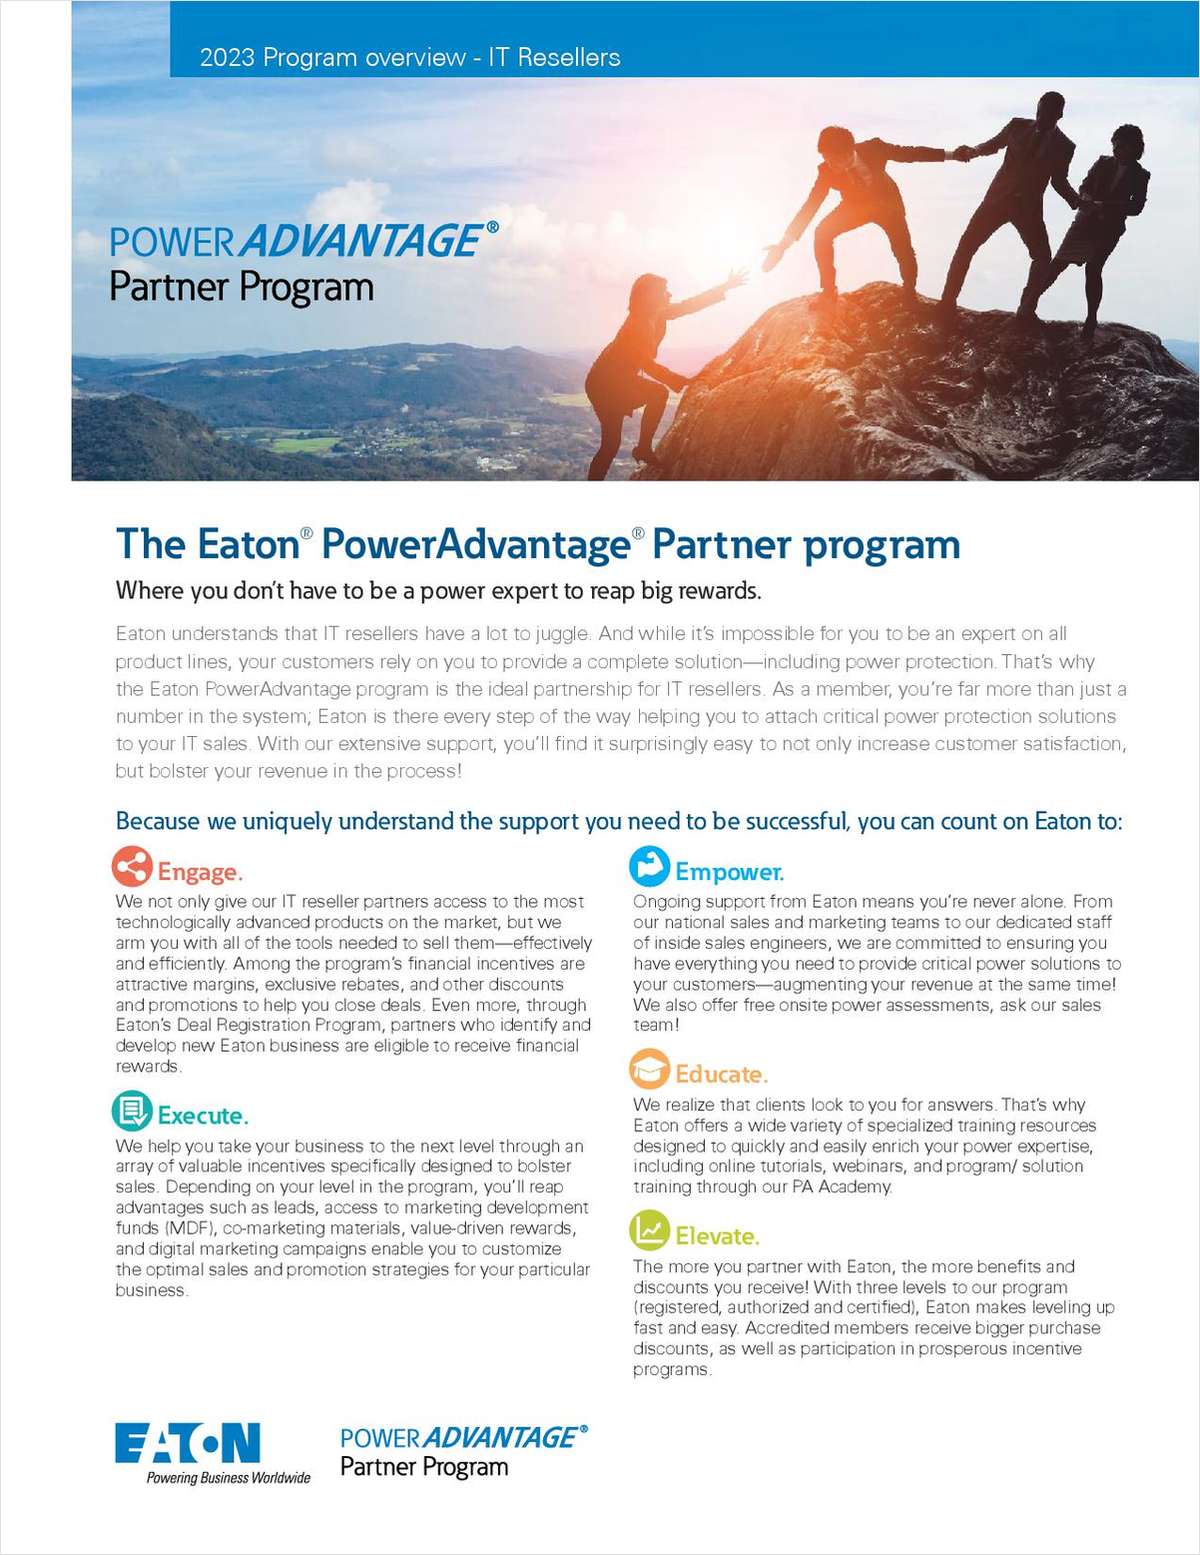 2023 Power Advantage Partner Program Overview